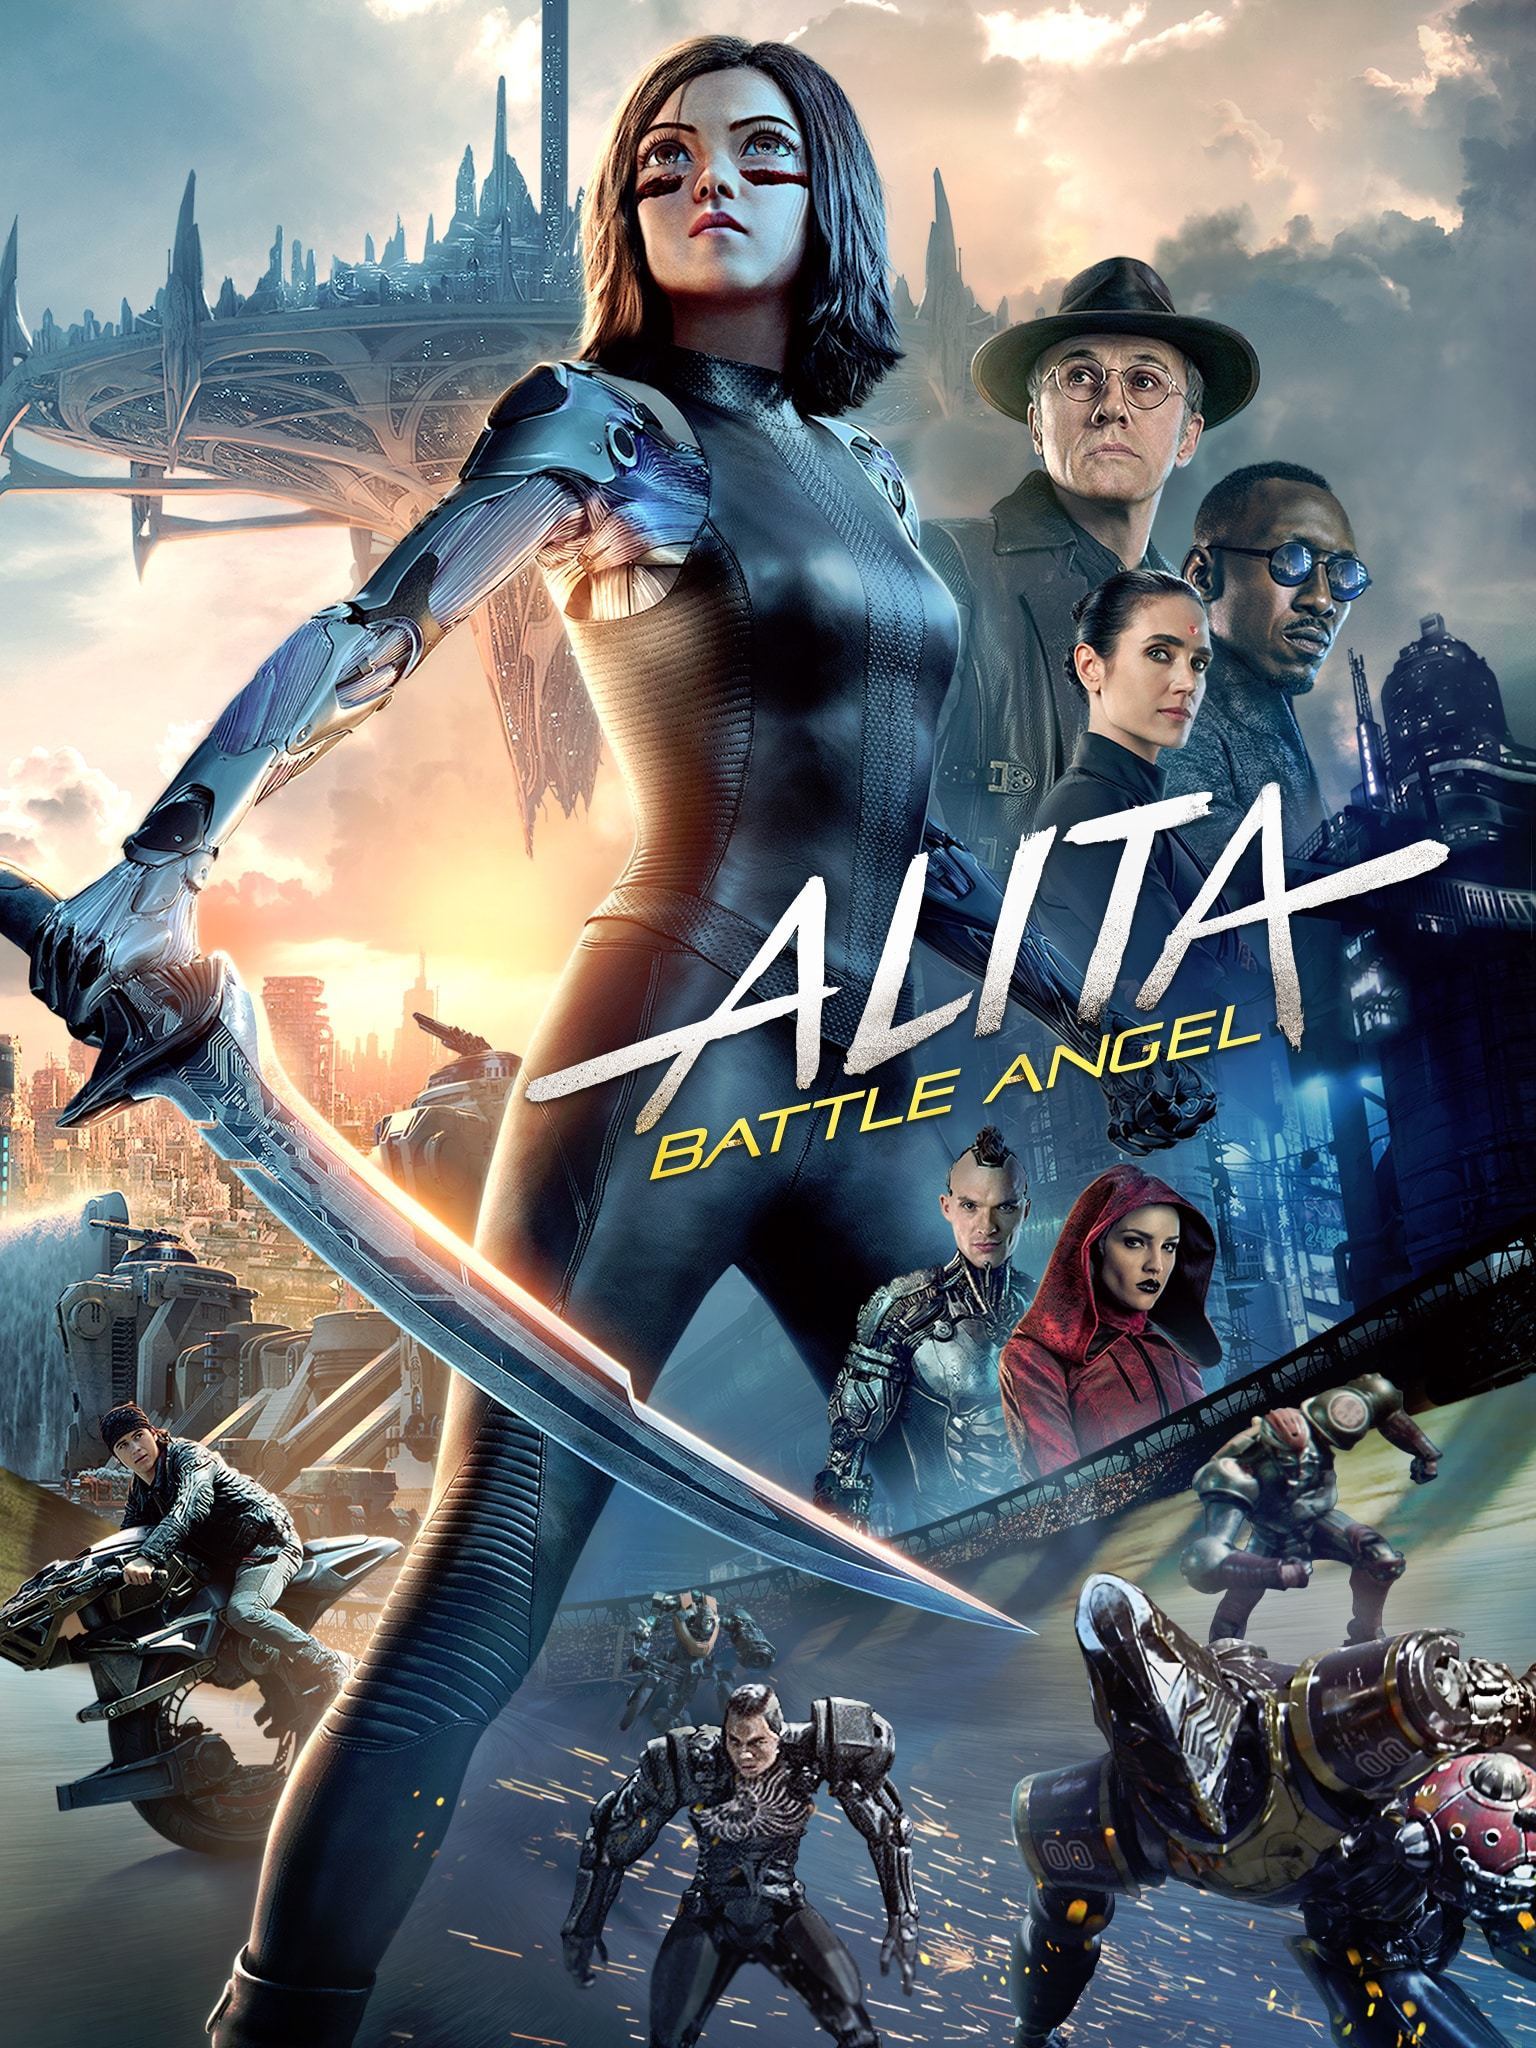 Robert Rodriguez: How We Made 'Alita: Battle Angel